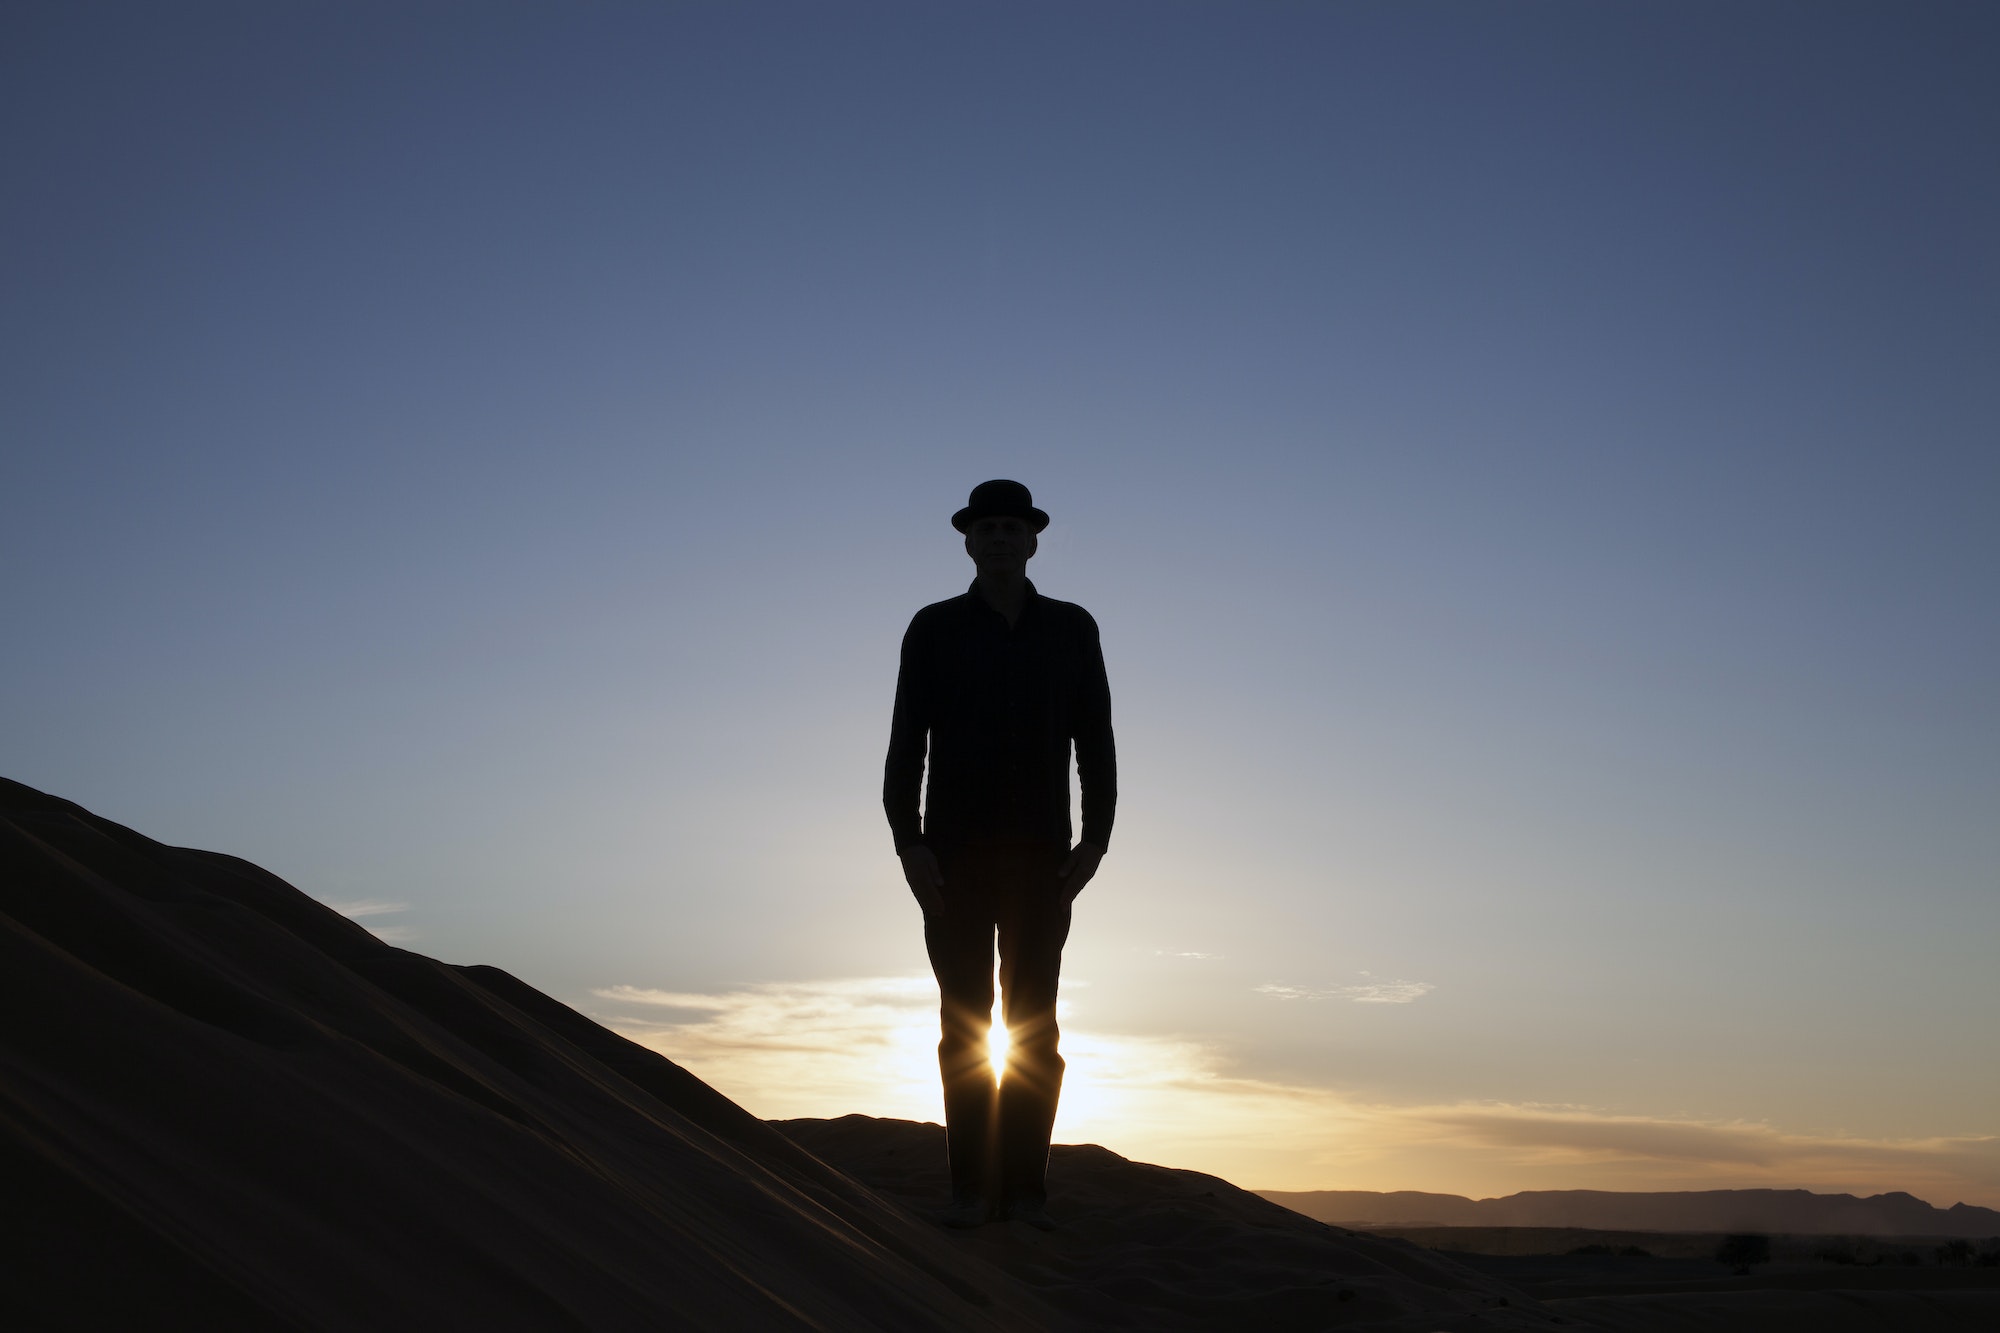 Morocco, Merzouga, Erg Chebbi, silhouette of man wearing a bowler hat standing on desert dune at sun, 9 days to Desert from casablanca